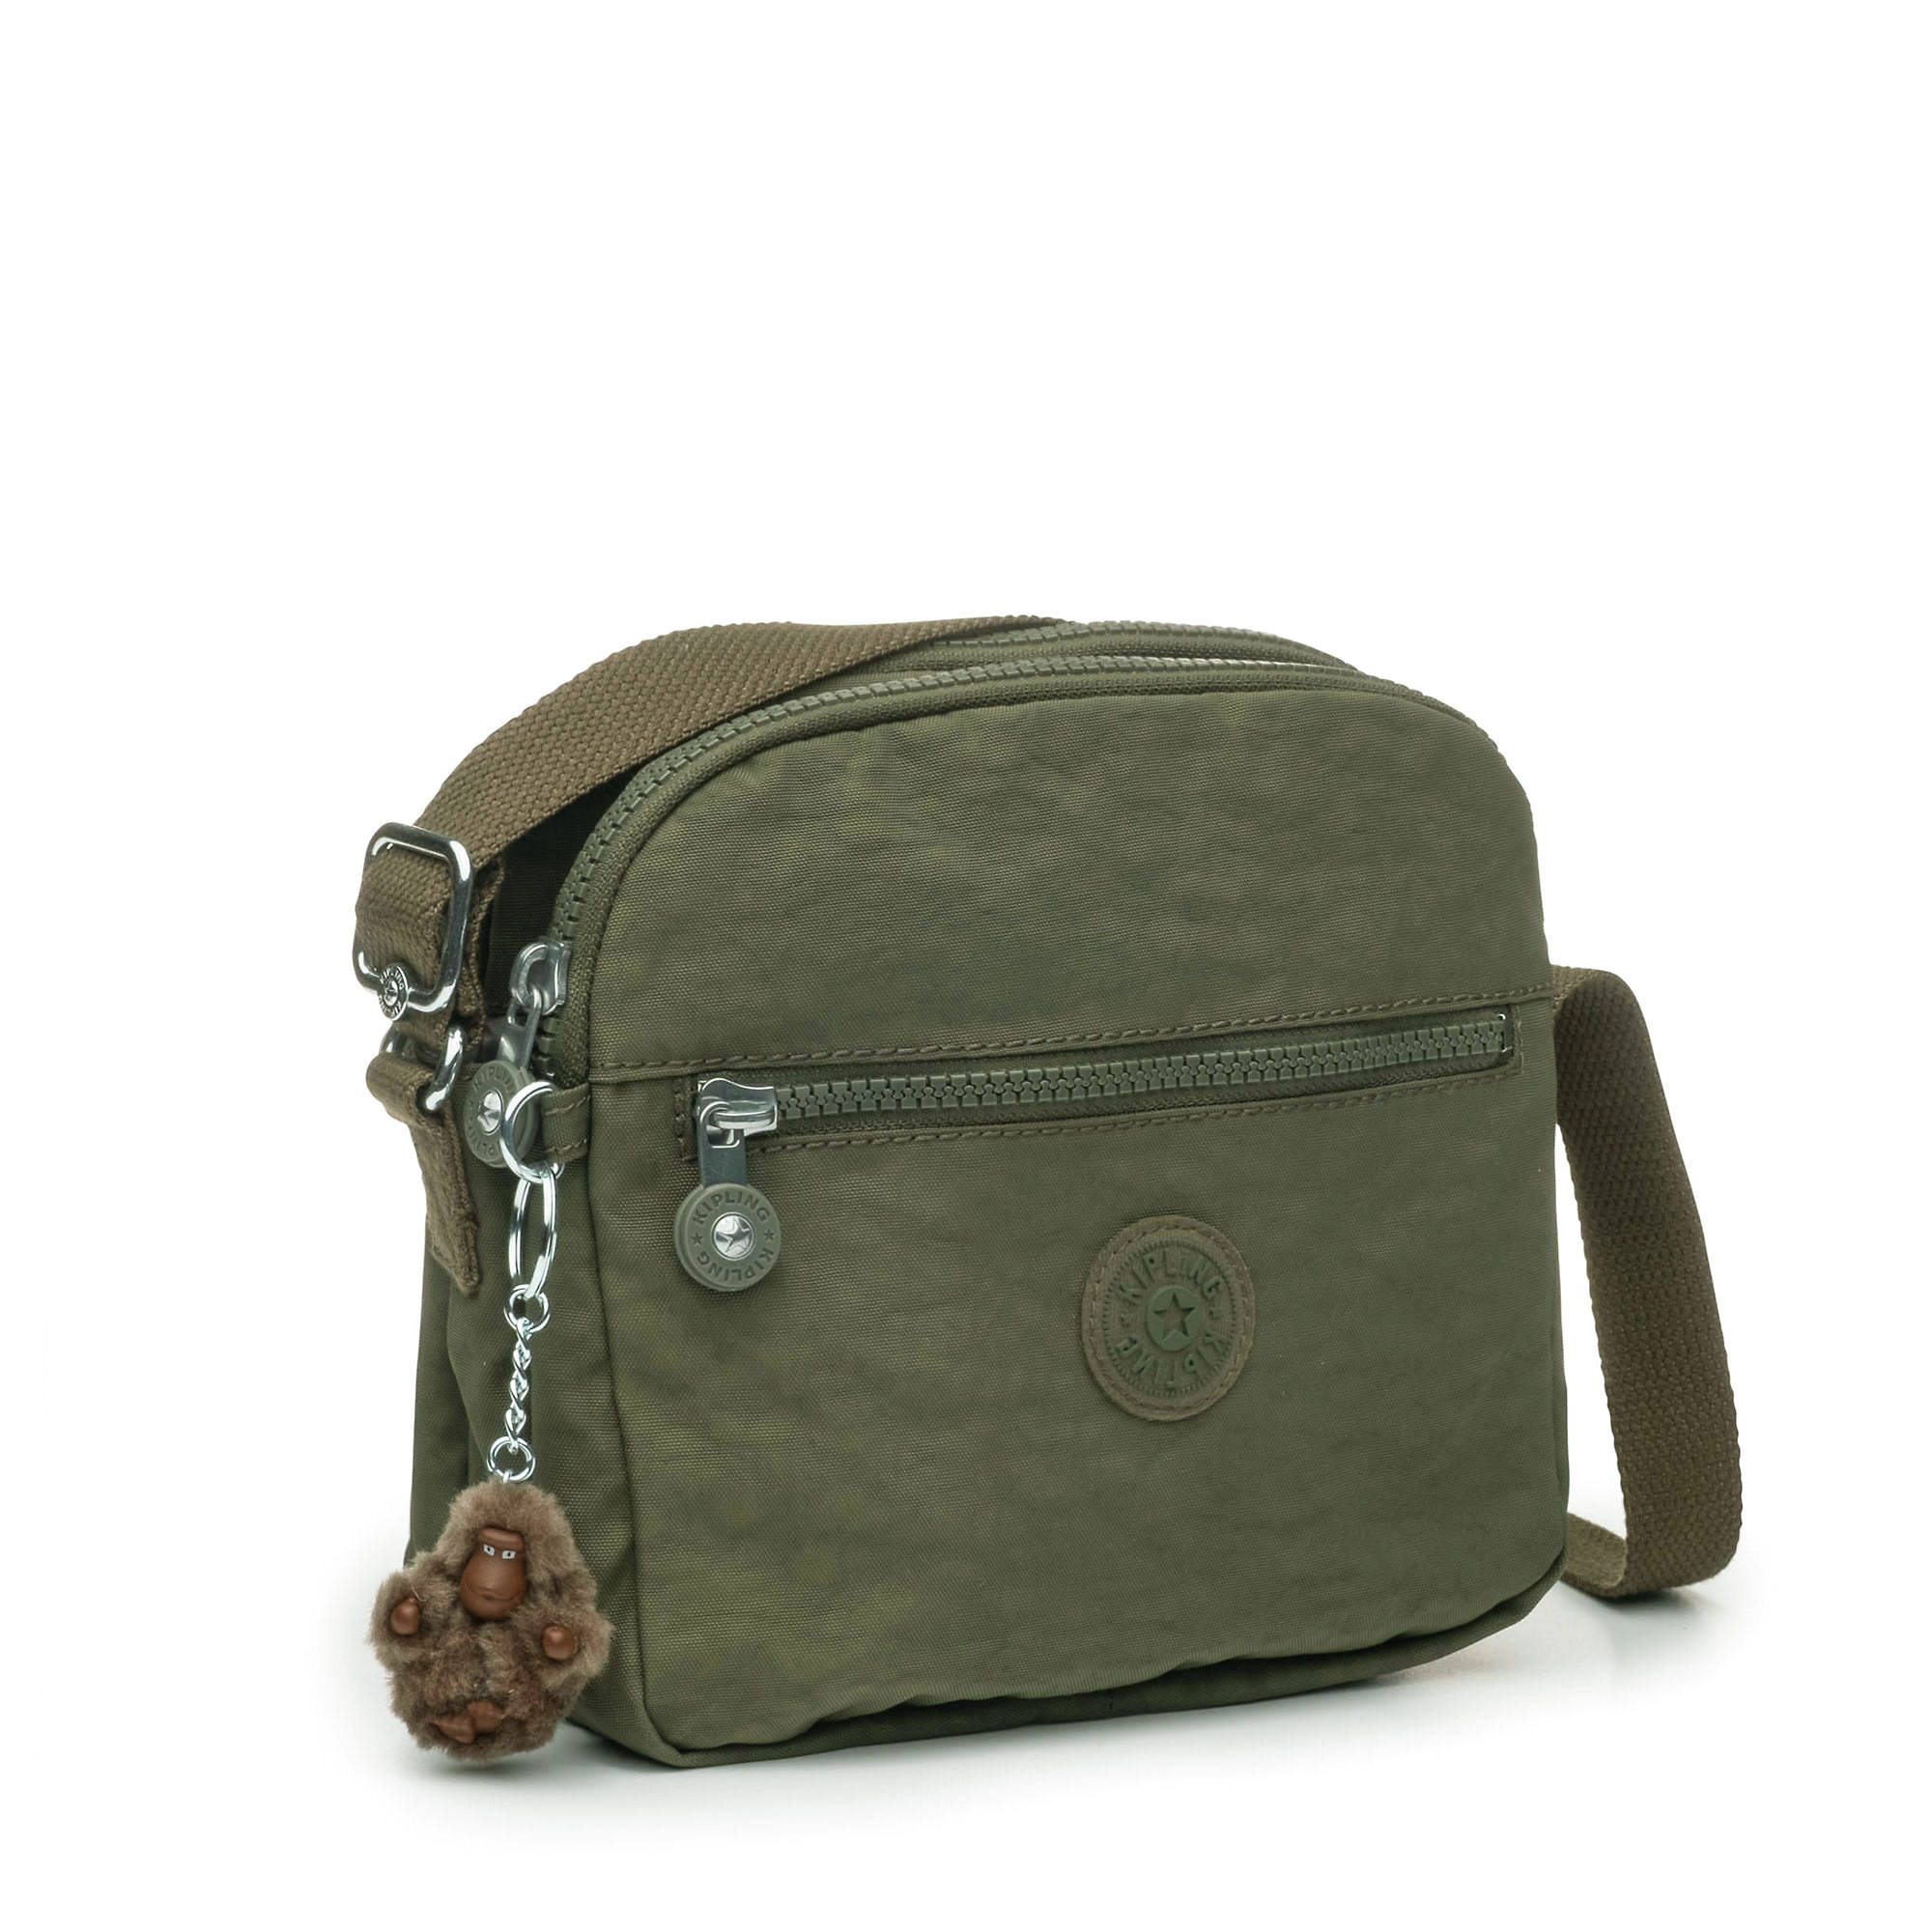 Kipling Keefe Crossbody Bag | eBay